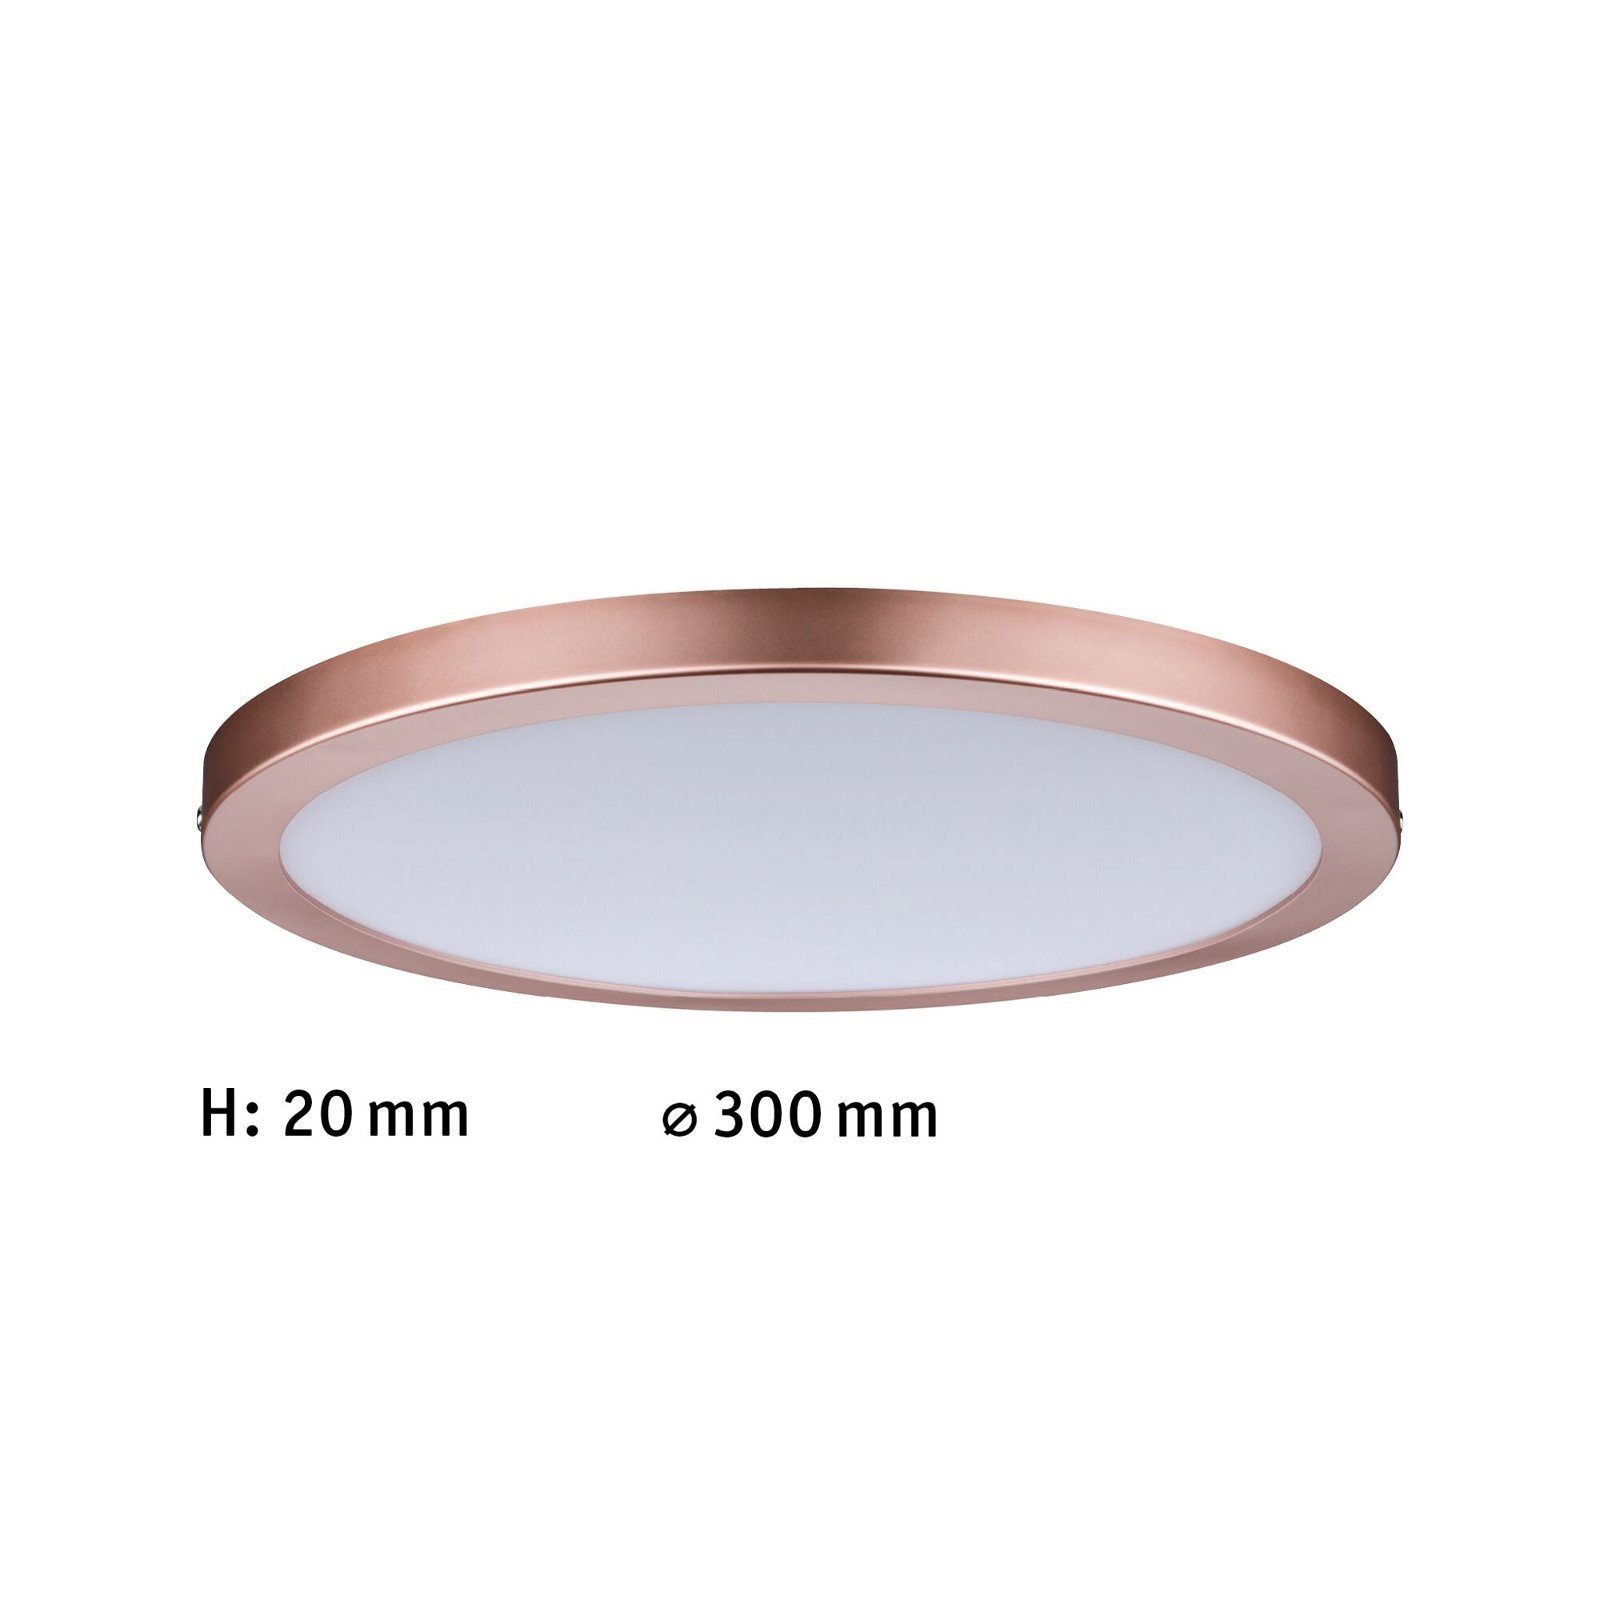 Atria LED 300mm Rosegold LED rund 22W 1450lm Paulmann 2700K integriert, Panel Kunststoff, fest Warmweiß 230V